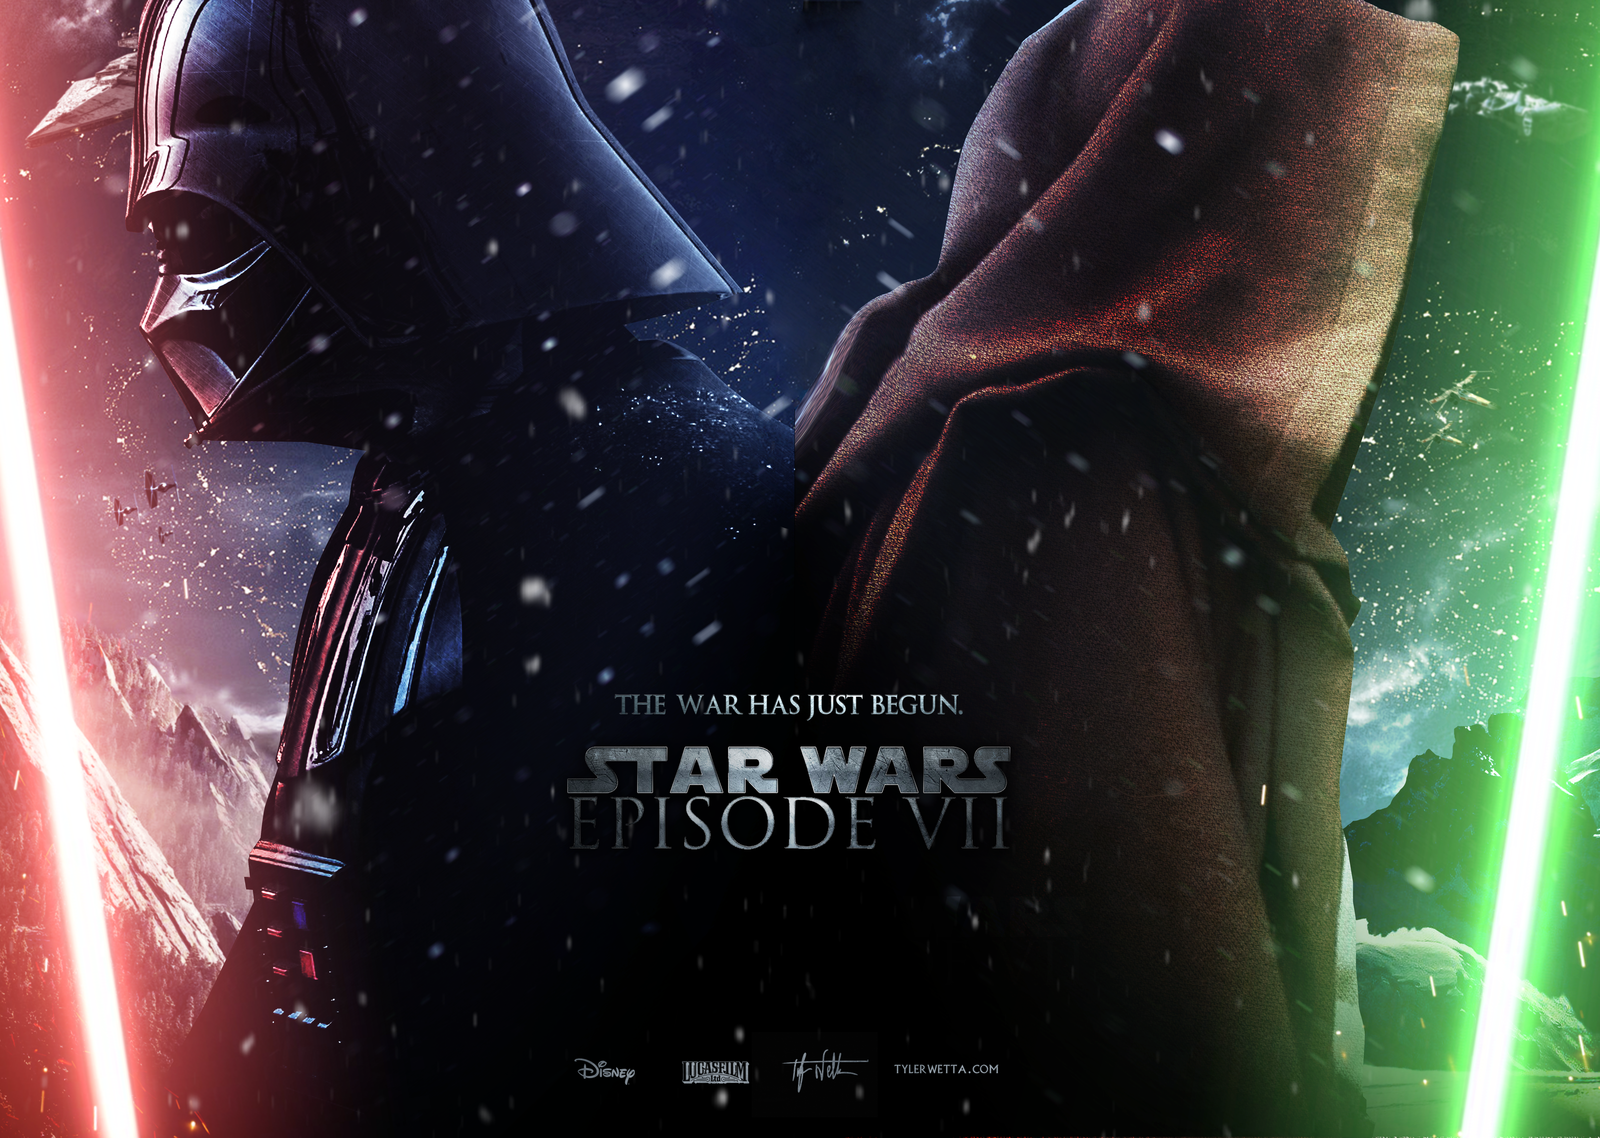 Star Wars Episode VII The Force Awakens 2015 Movie